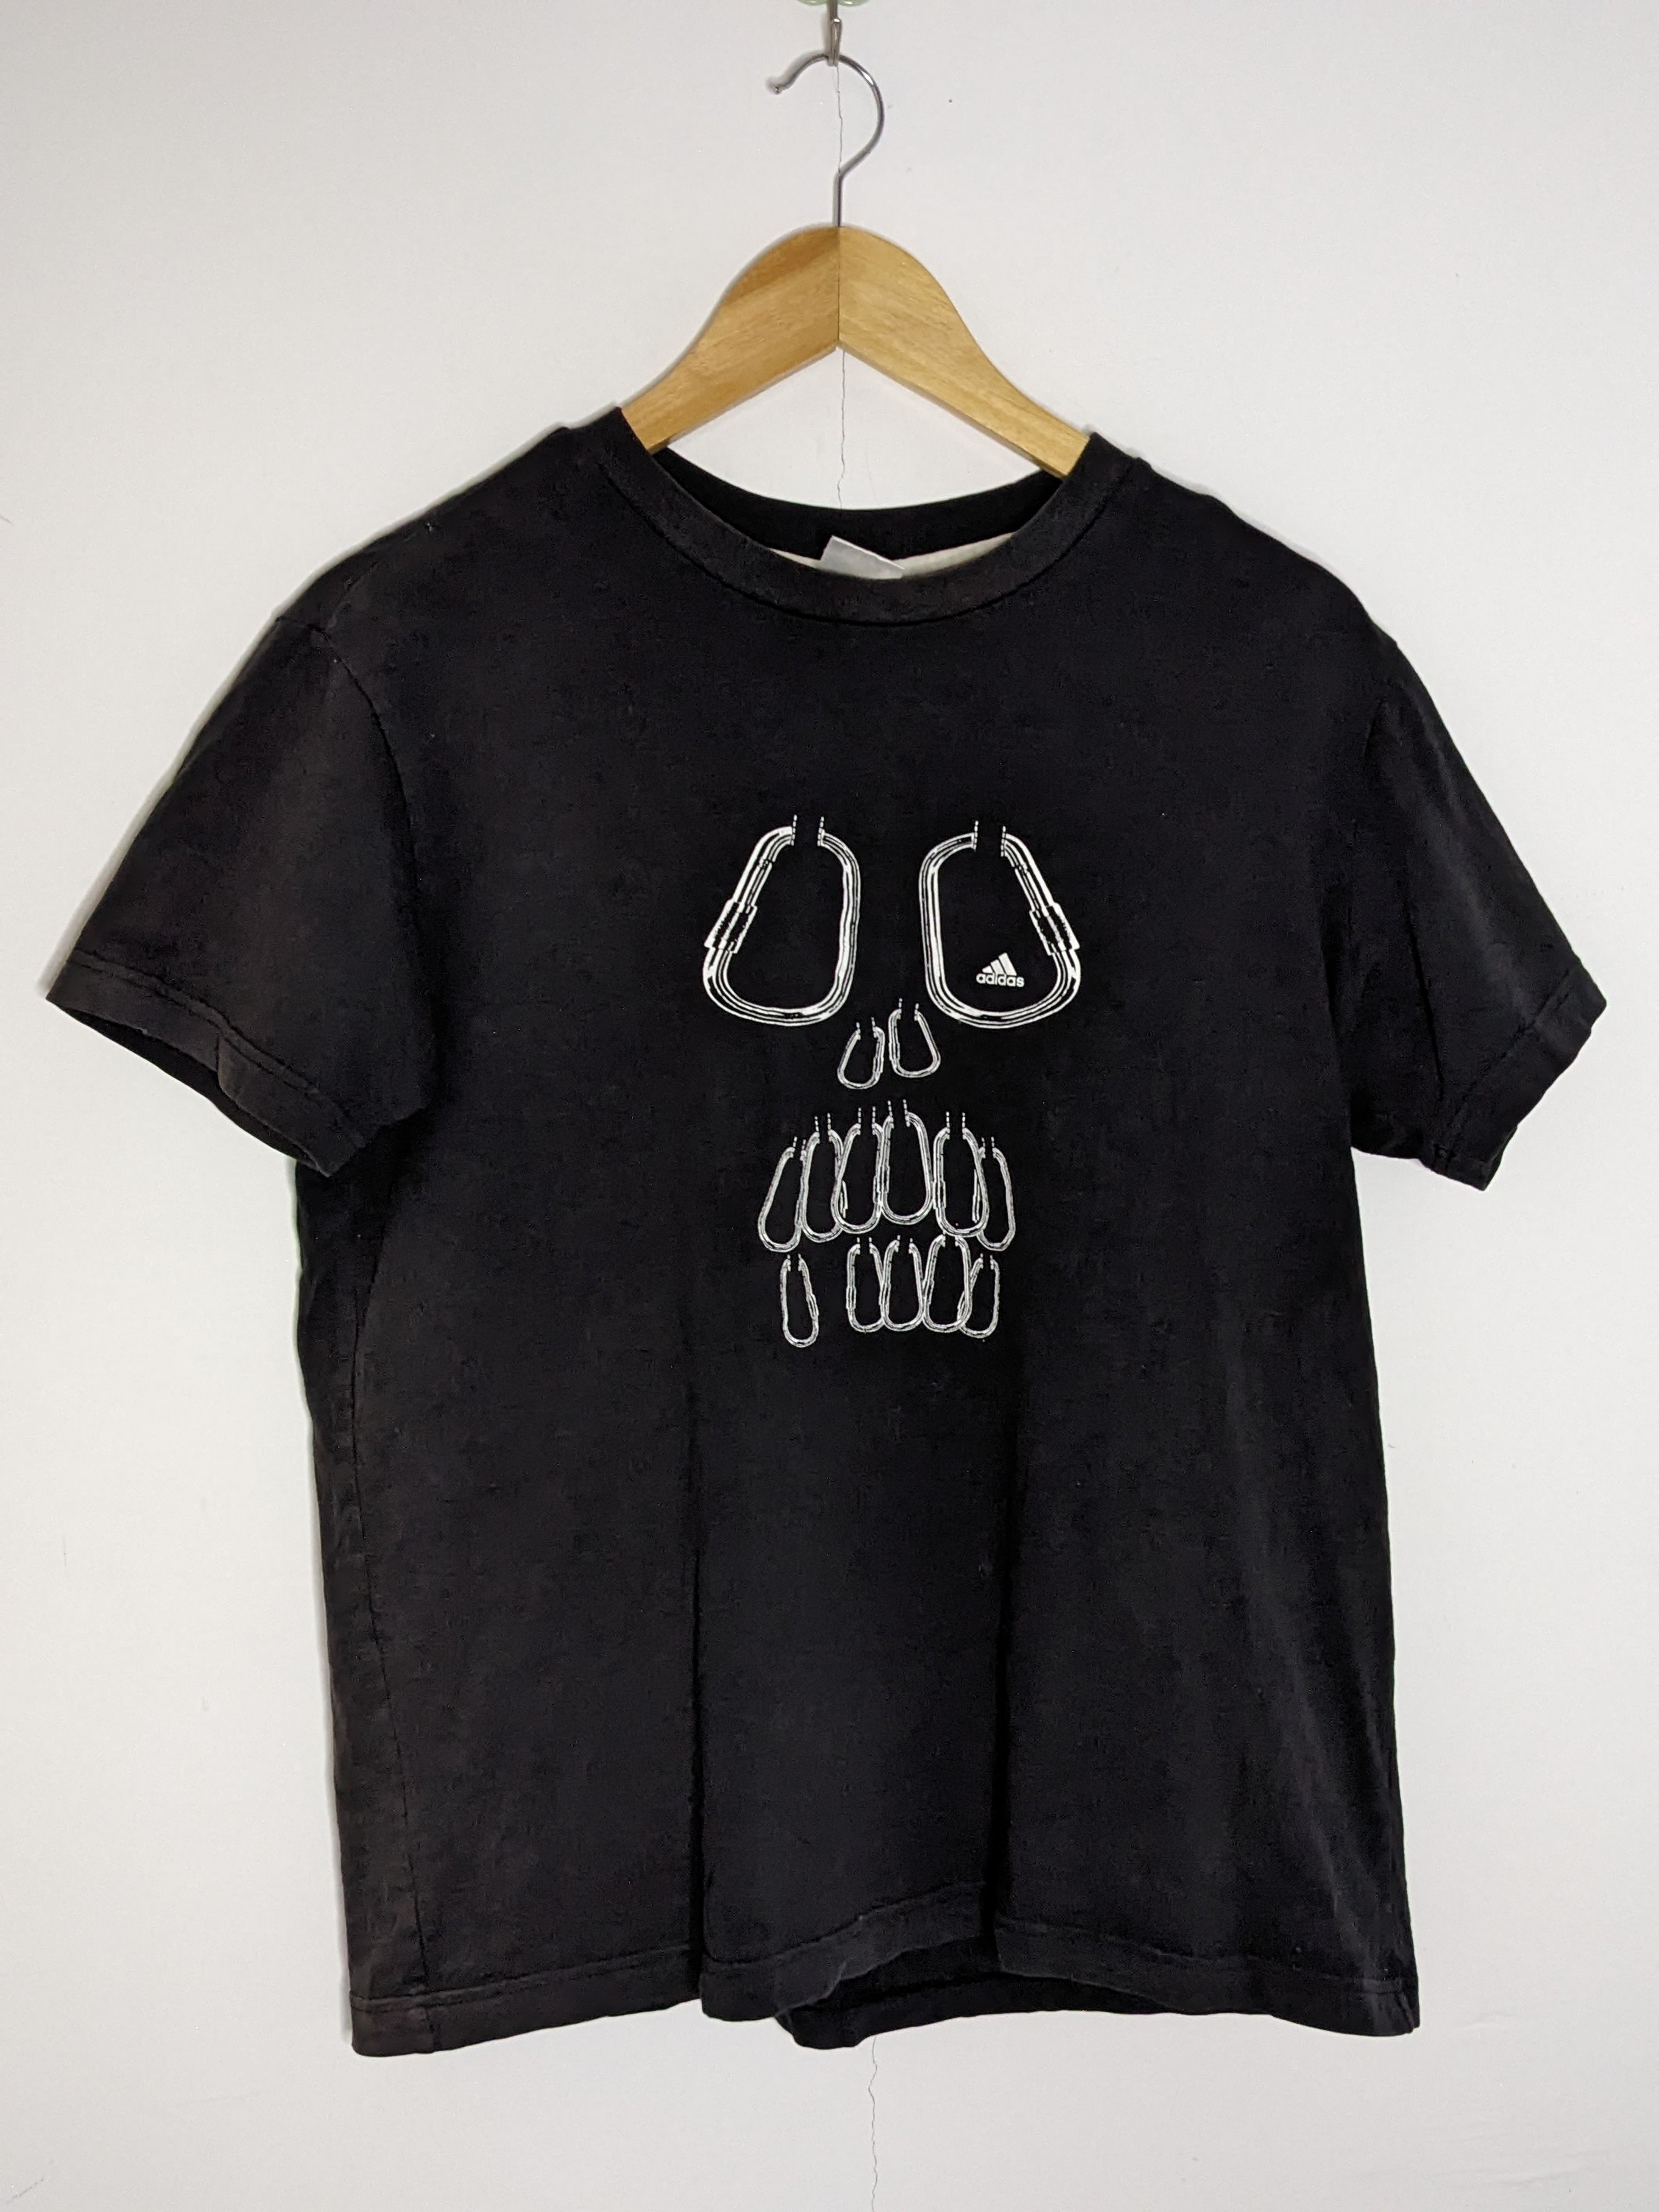 Adidas Skull Carabiner Rock Climbing Sunfaded Black Shirt - 4